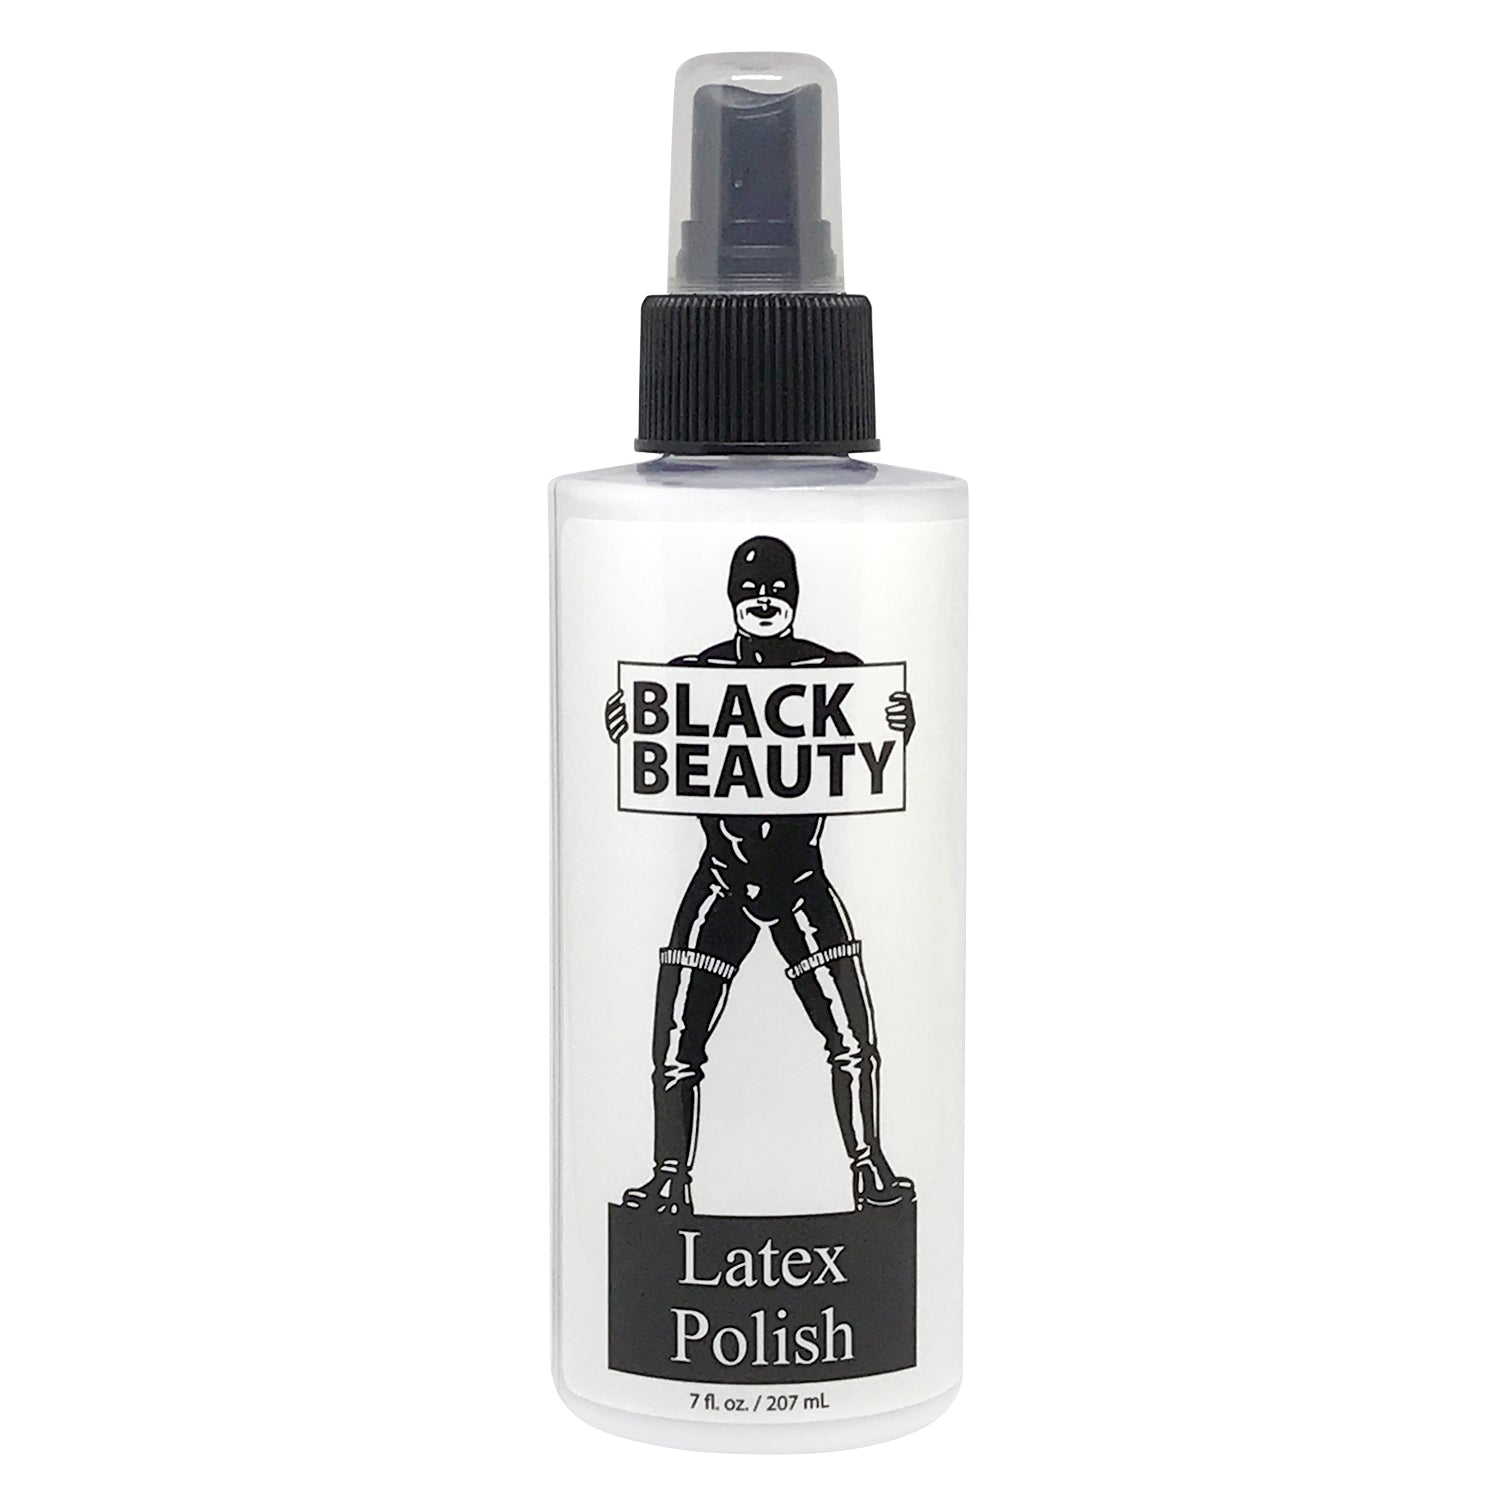 Black Beauty - Latex Polish Spray Bottle 8oz/236ml